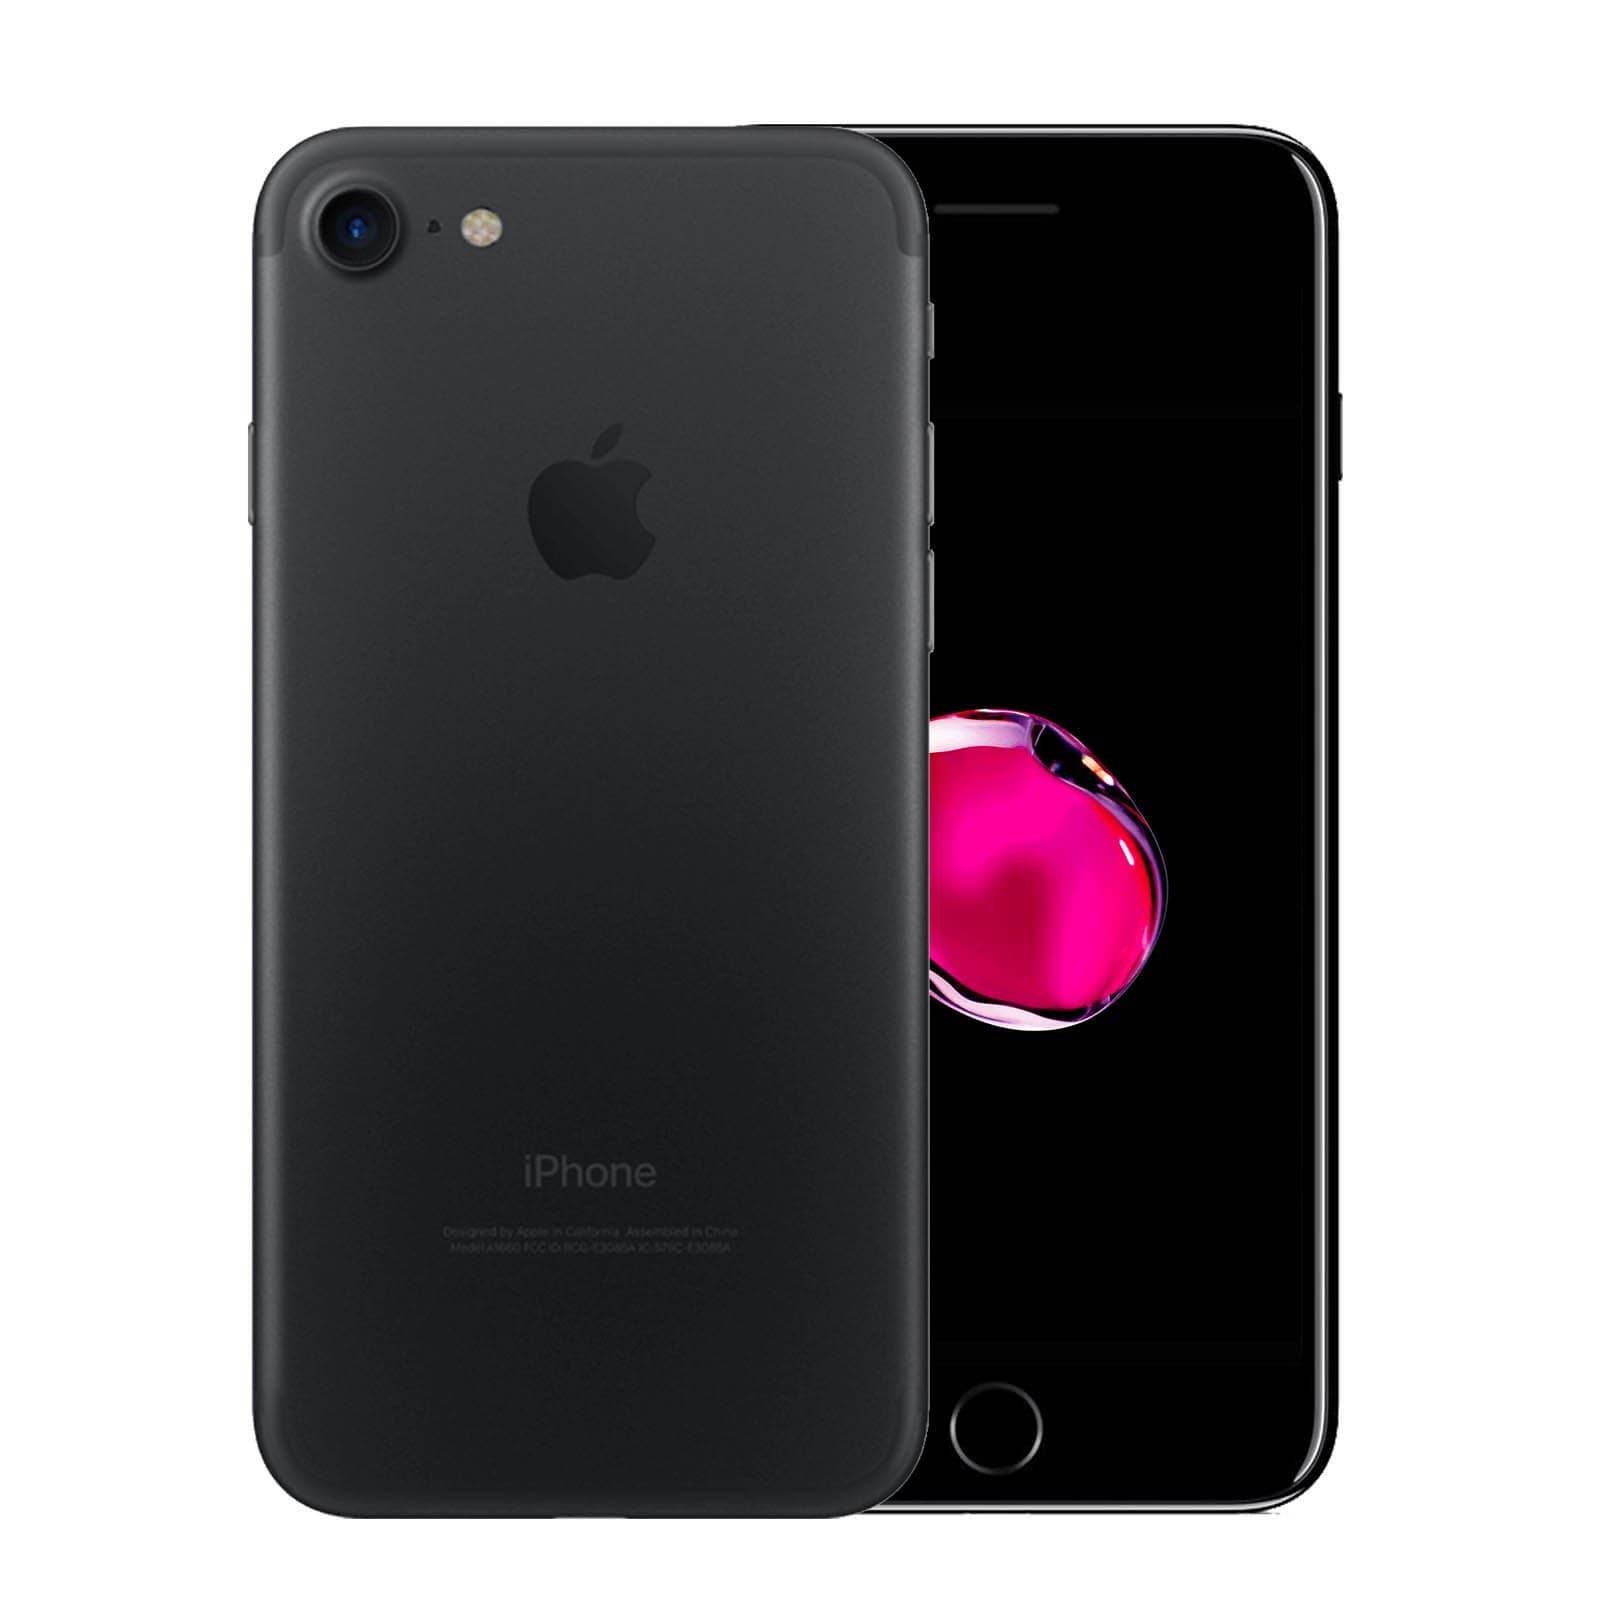 Apple iPhone 7 128GB Black Pristine - Unlocked 128GB Black Pristine